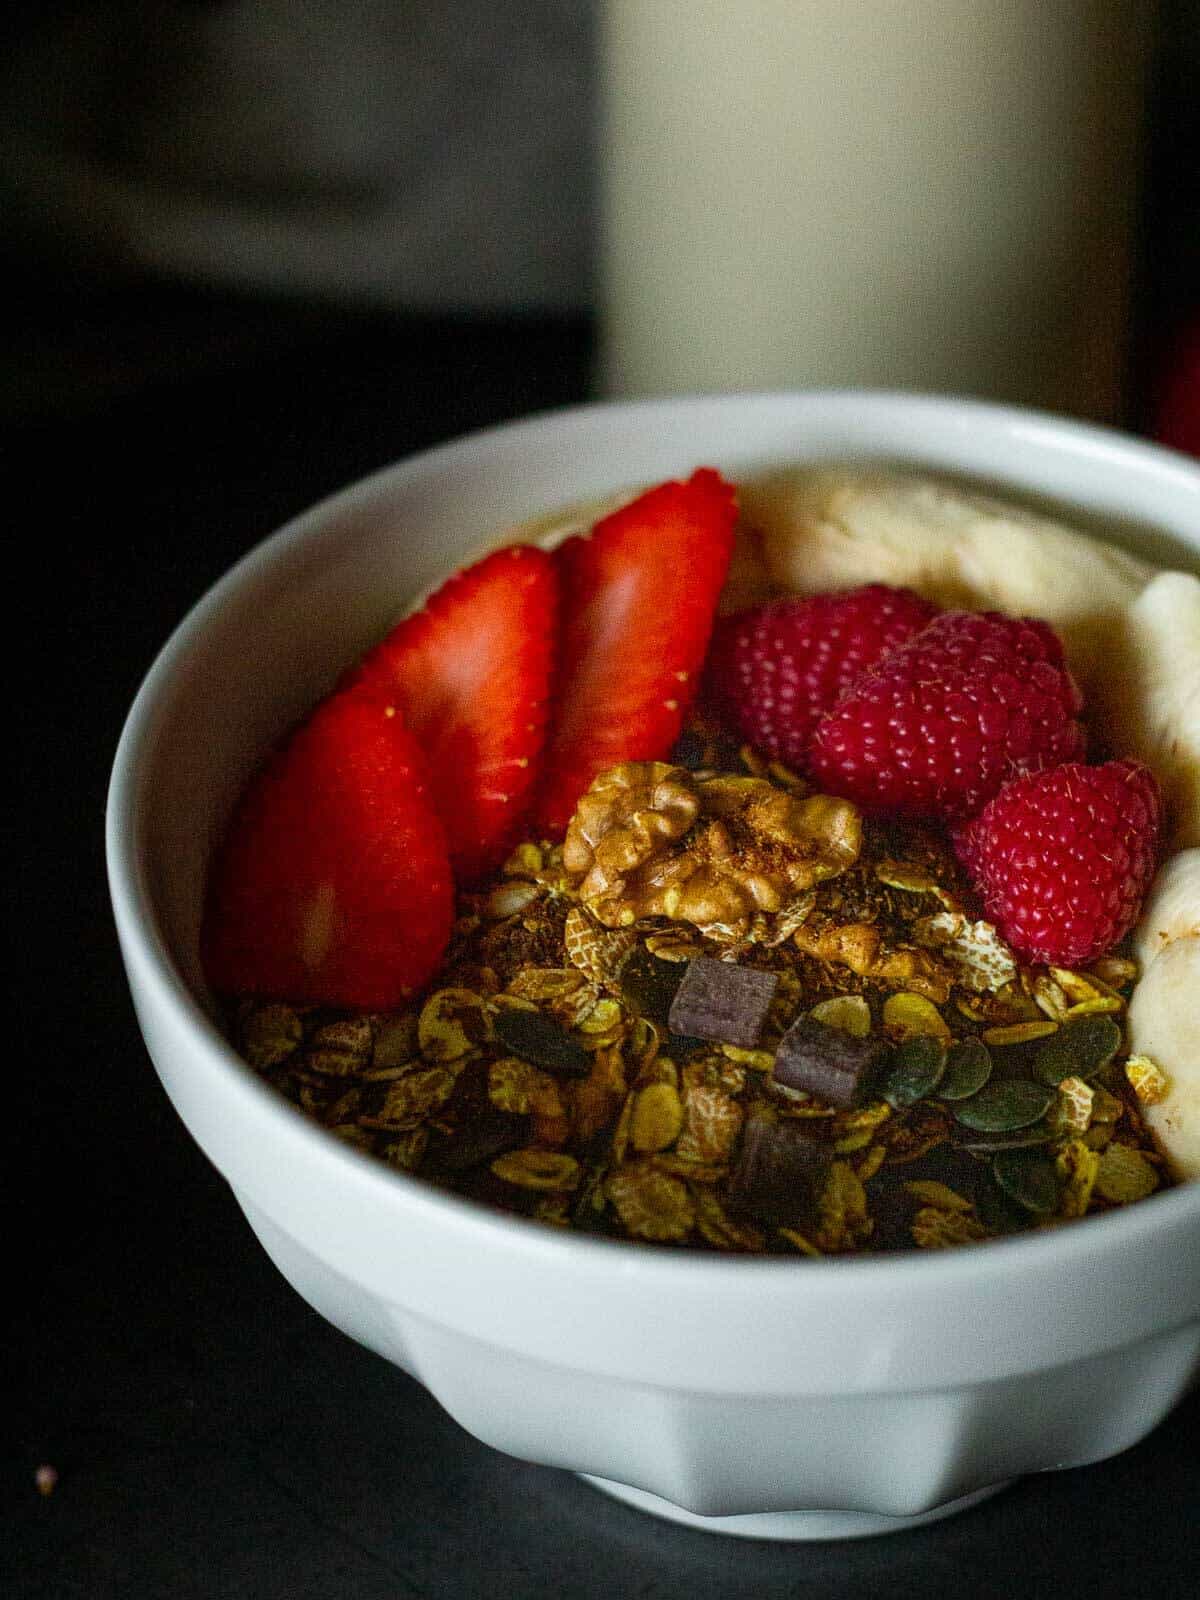 homemade granola bowl with berries and bananas